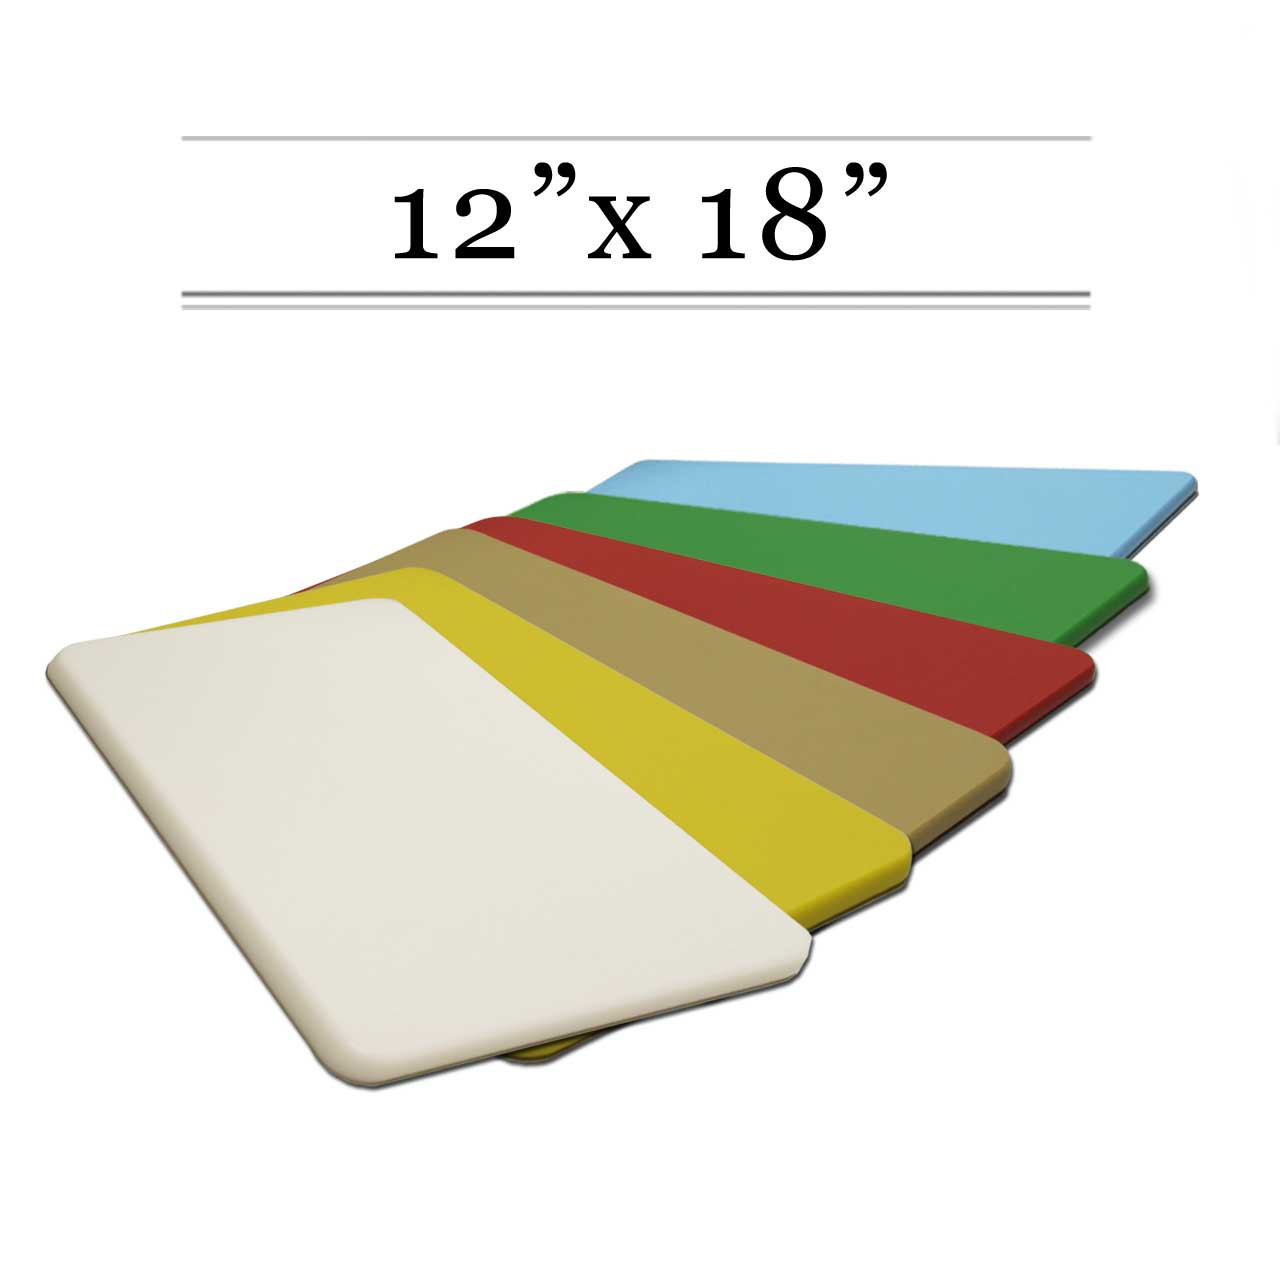 Read Products CB-141218 Richlite 12 x 18 Cutting Board